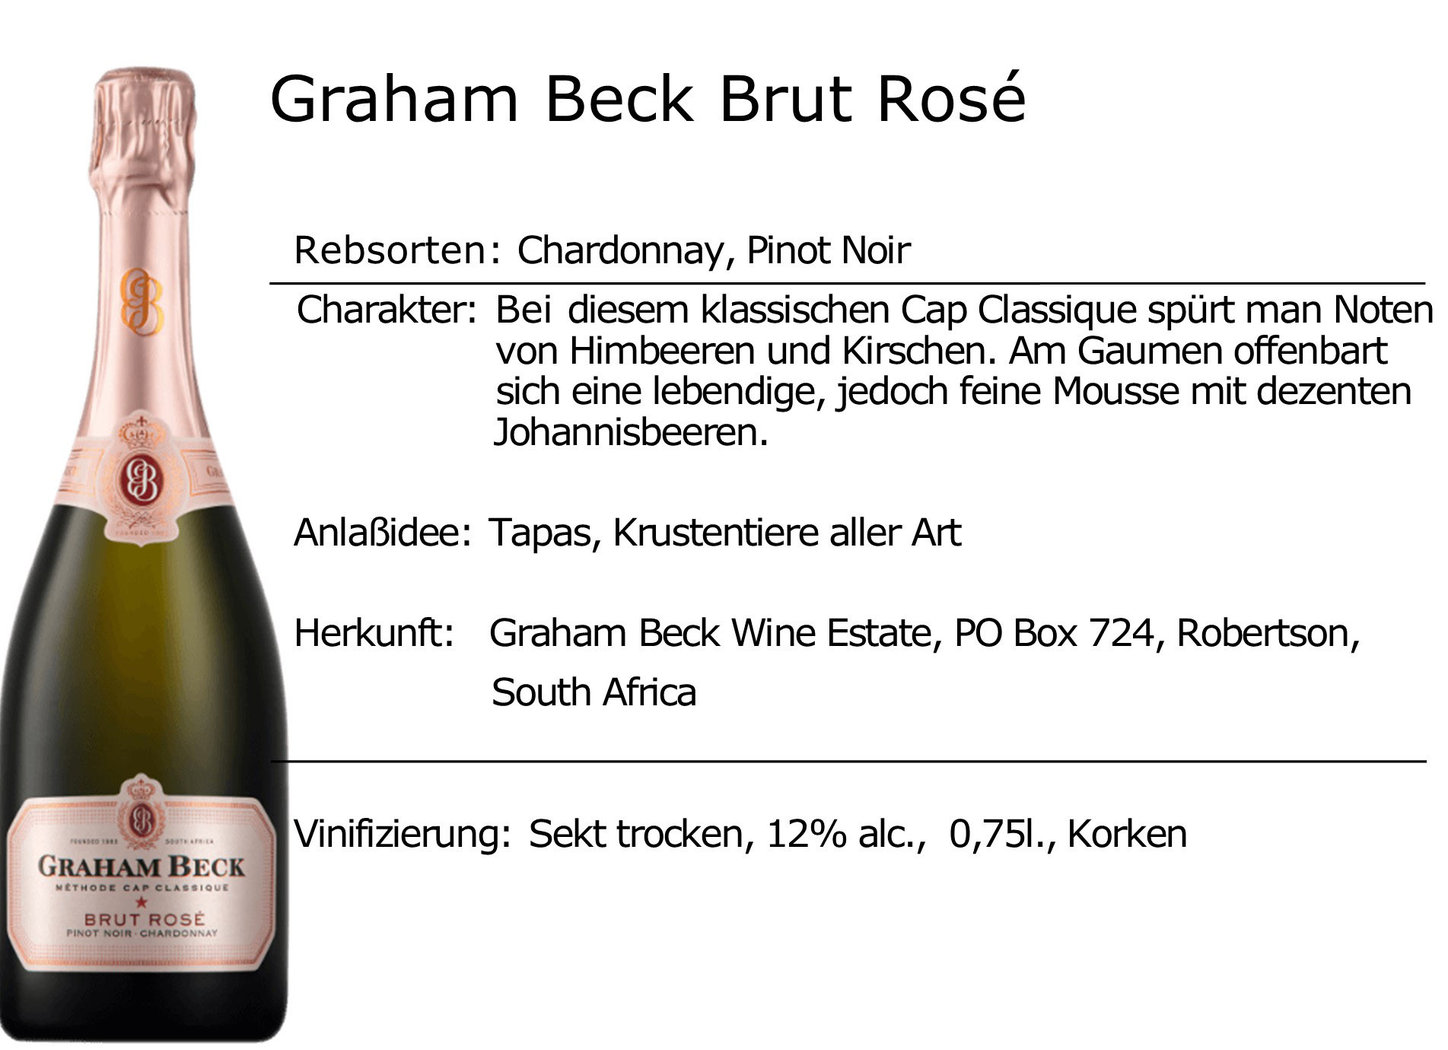 Graham Beck MCC Brut Rosé